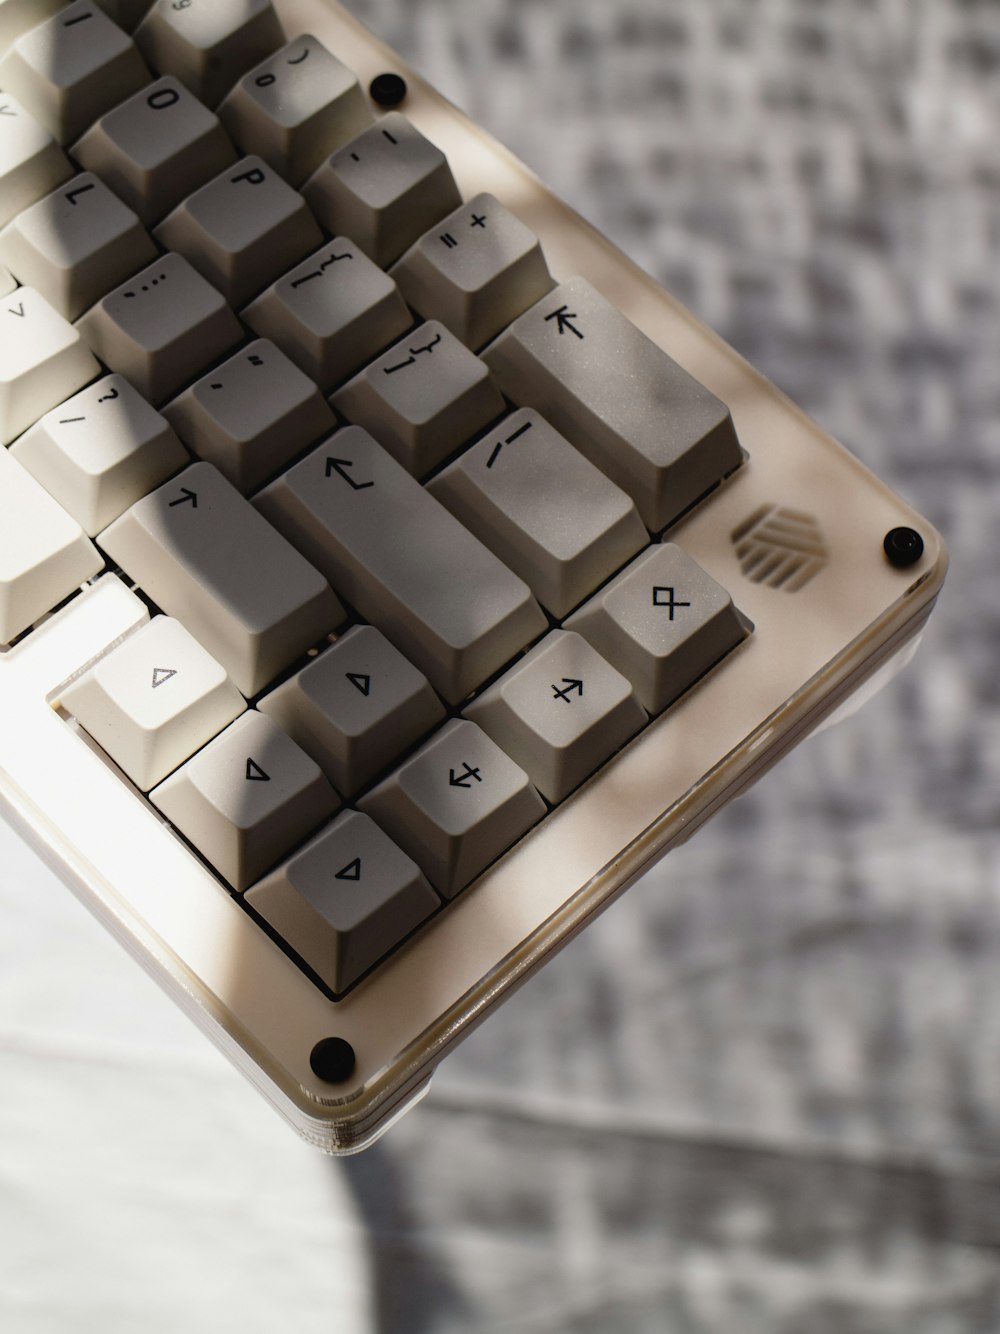 a white keyboard with black keys